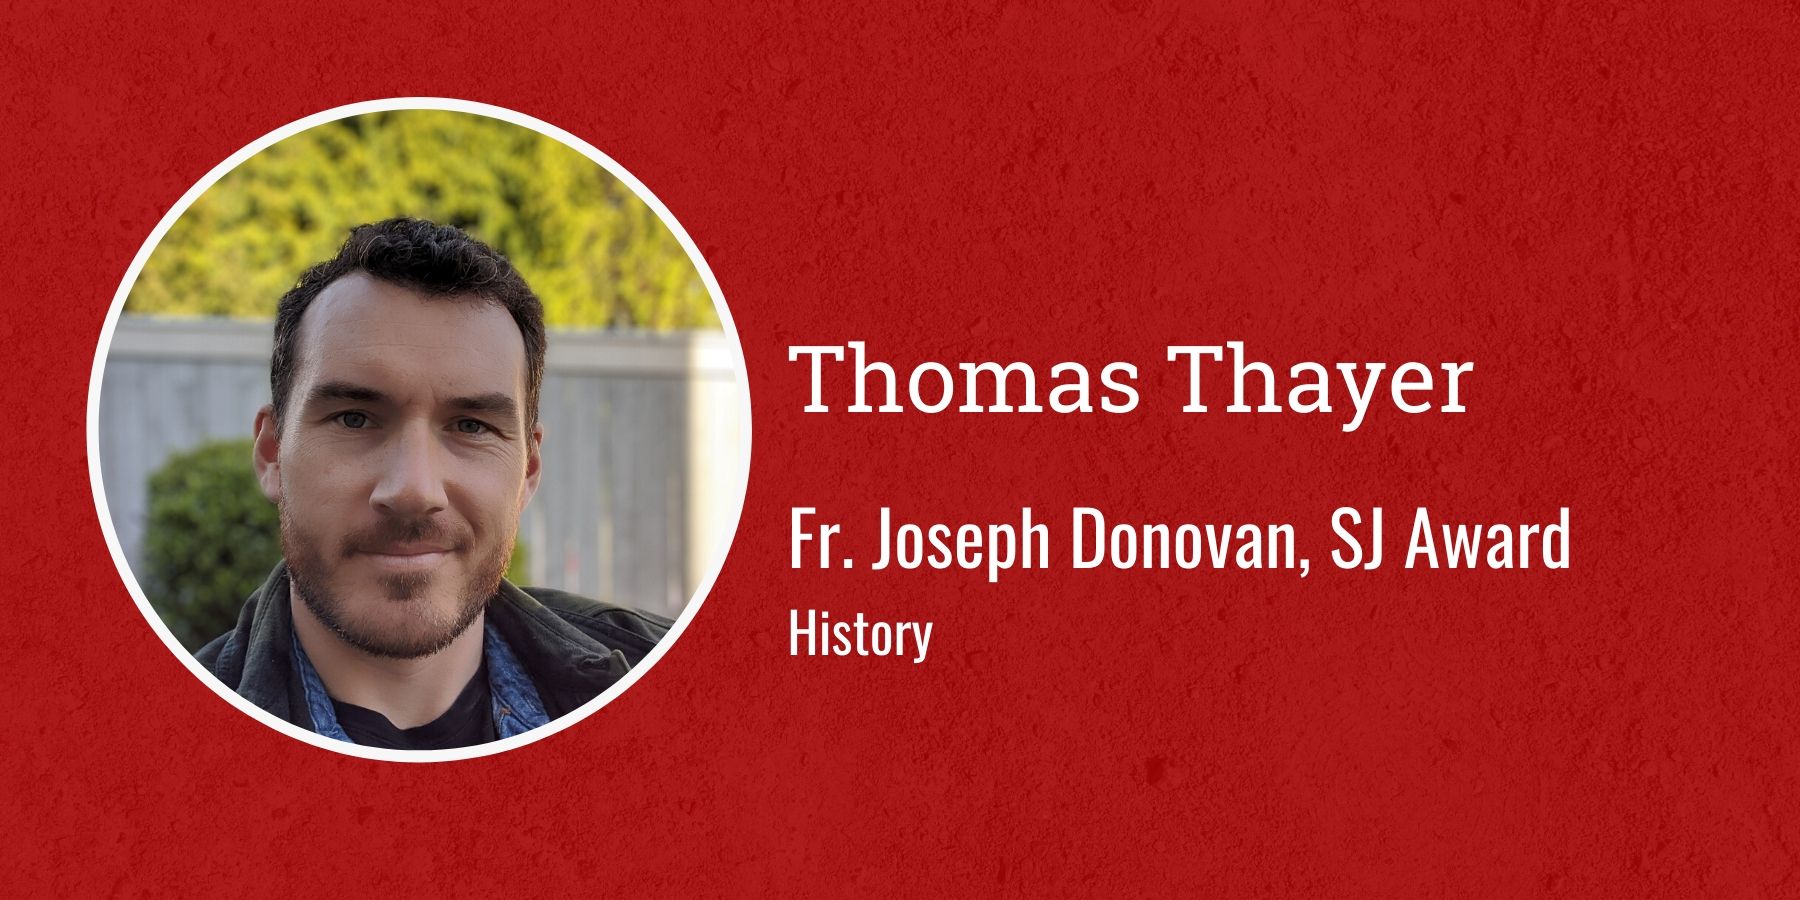 Photo of Thomas Thayer and text Fr. Joseph Donovan, S.J. Award, History